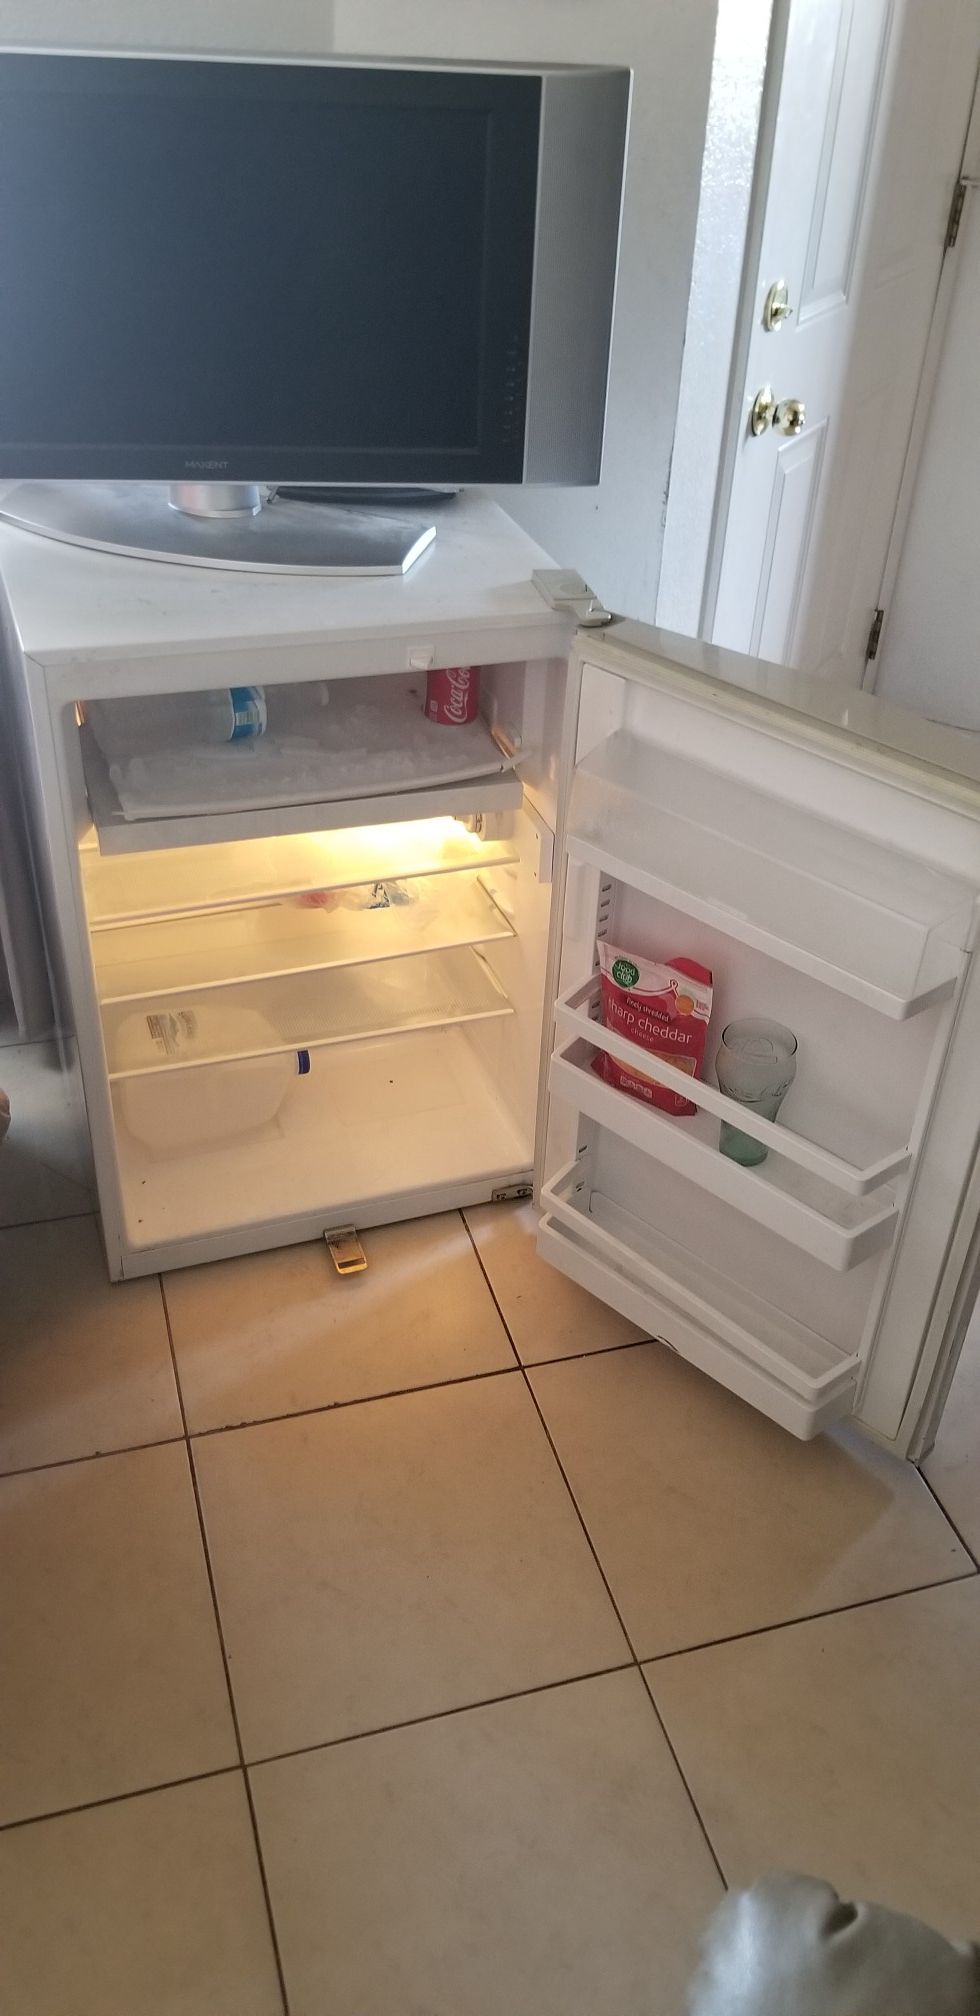 Haier fridge/freezer